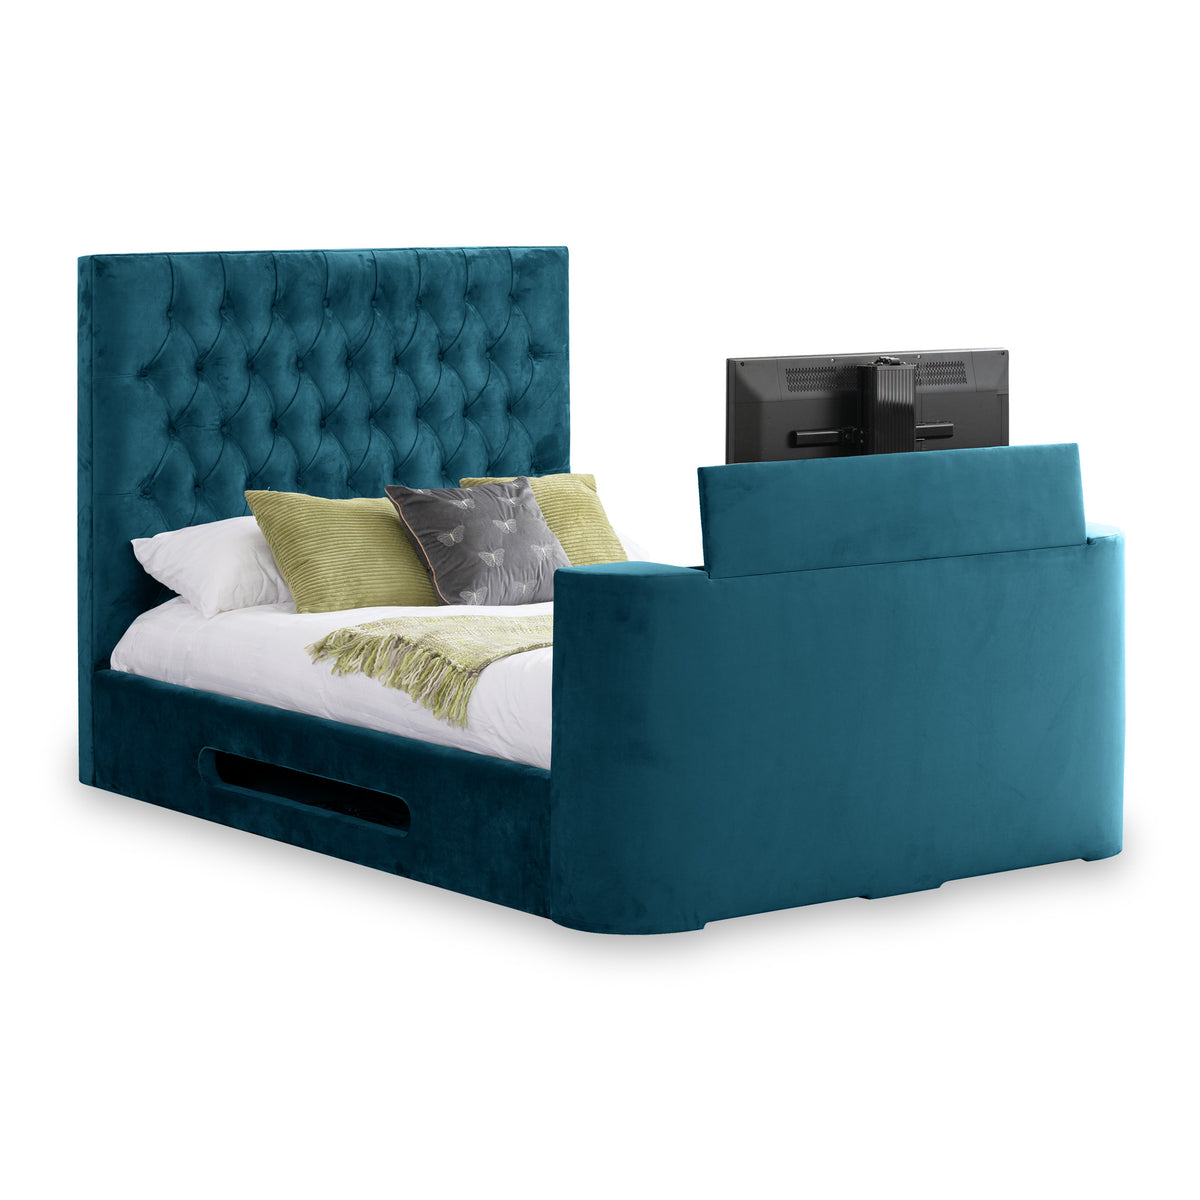 Tilly Velvet TV Bed Frame in Chatsworth Teal by Roseland Furniture